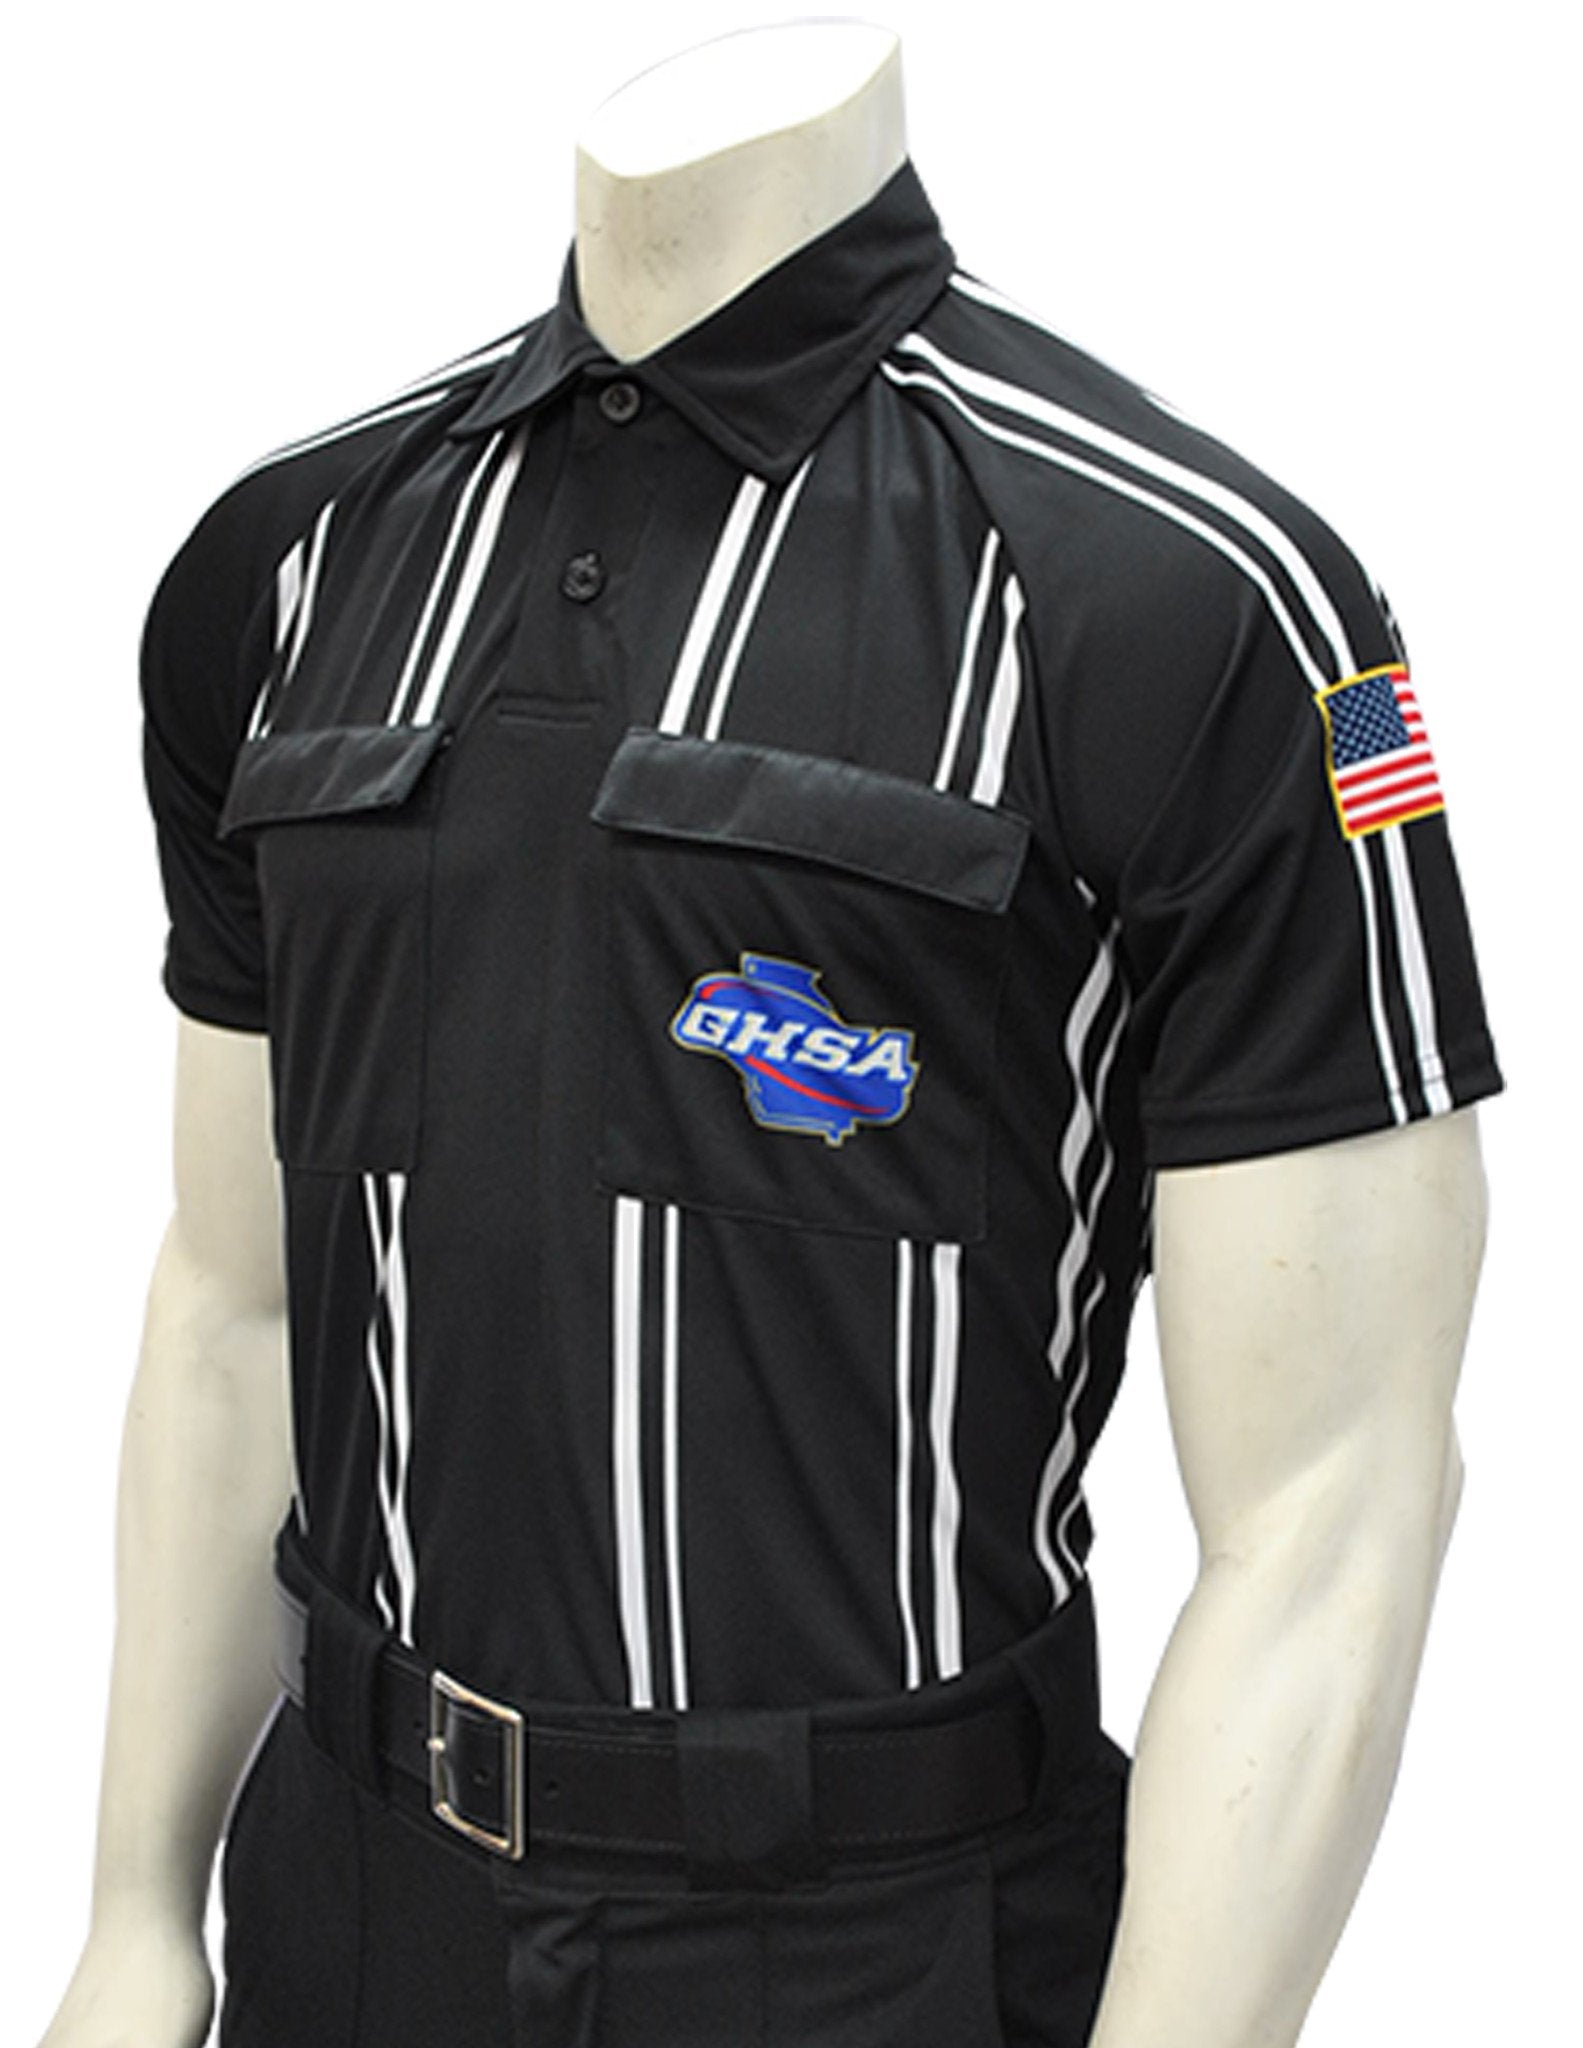 USA900GA - Smitty "Made in USA" - Black-Dye Sub Georgia Black Soccer Short Sleeve Shirt